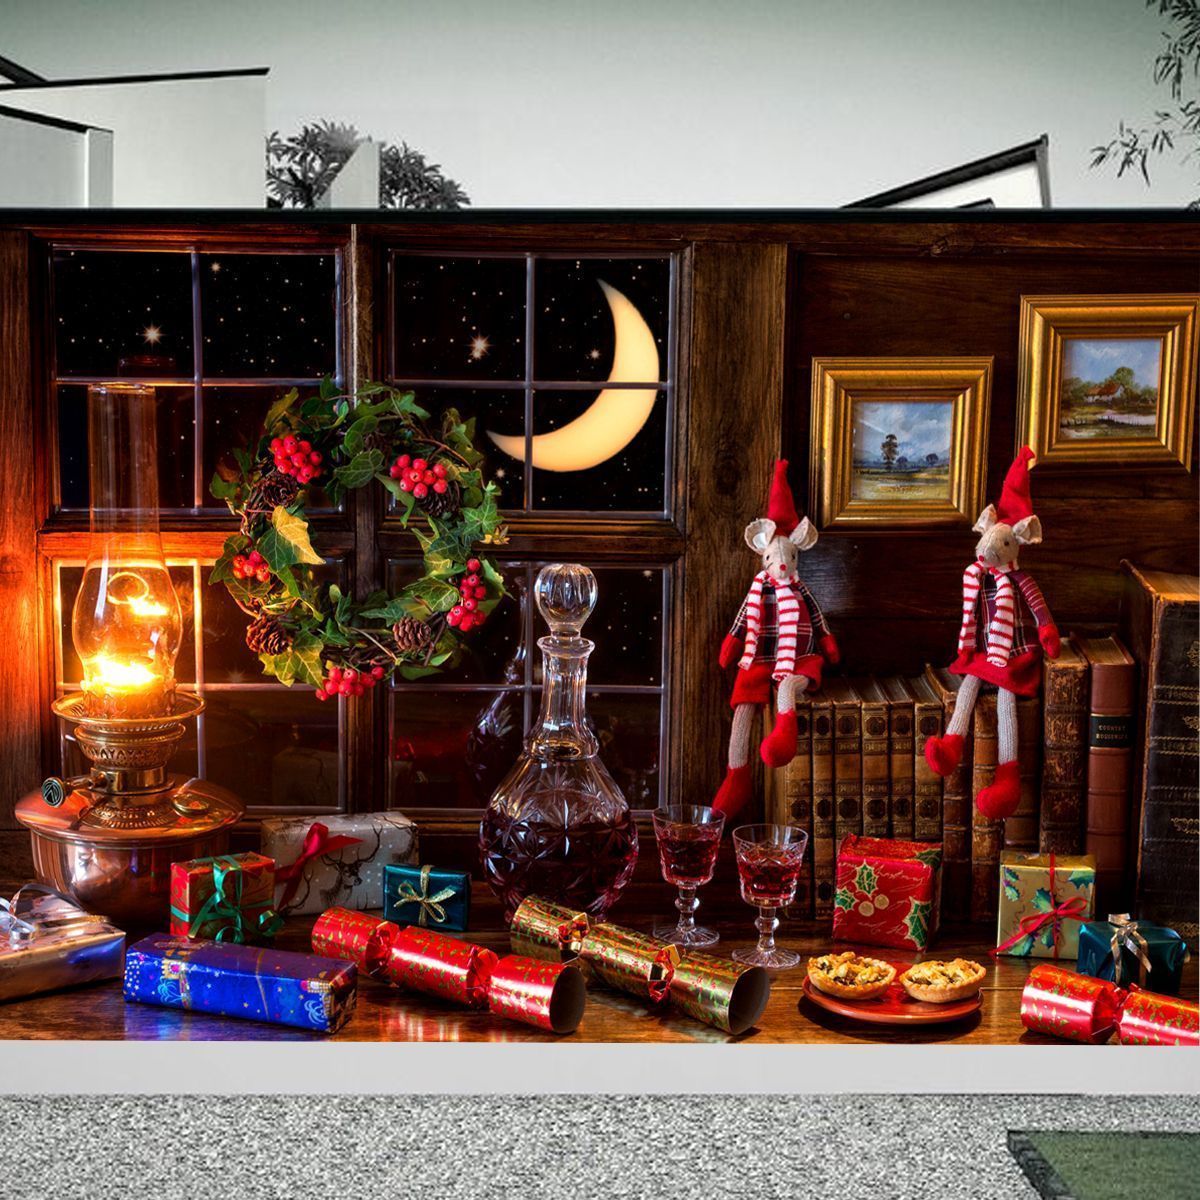 5x7ft-Vinyl-Red-Wine-Gift-Window-Christmas-Photo-Backdrops-Photography-Background-Studio-Prop-1217138